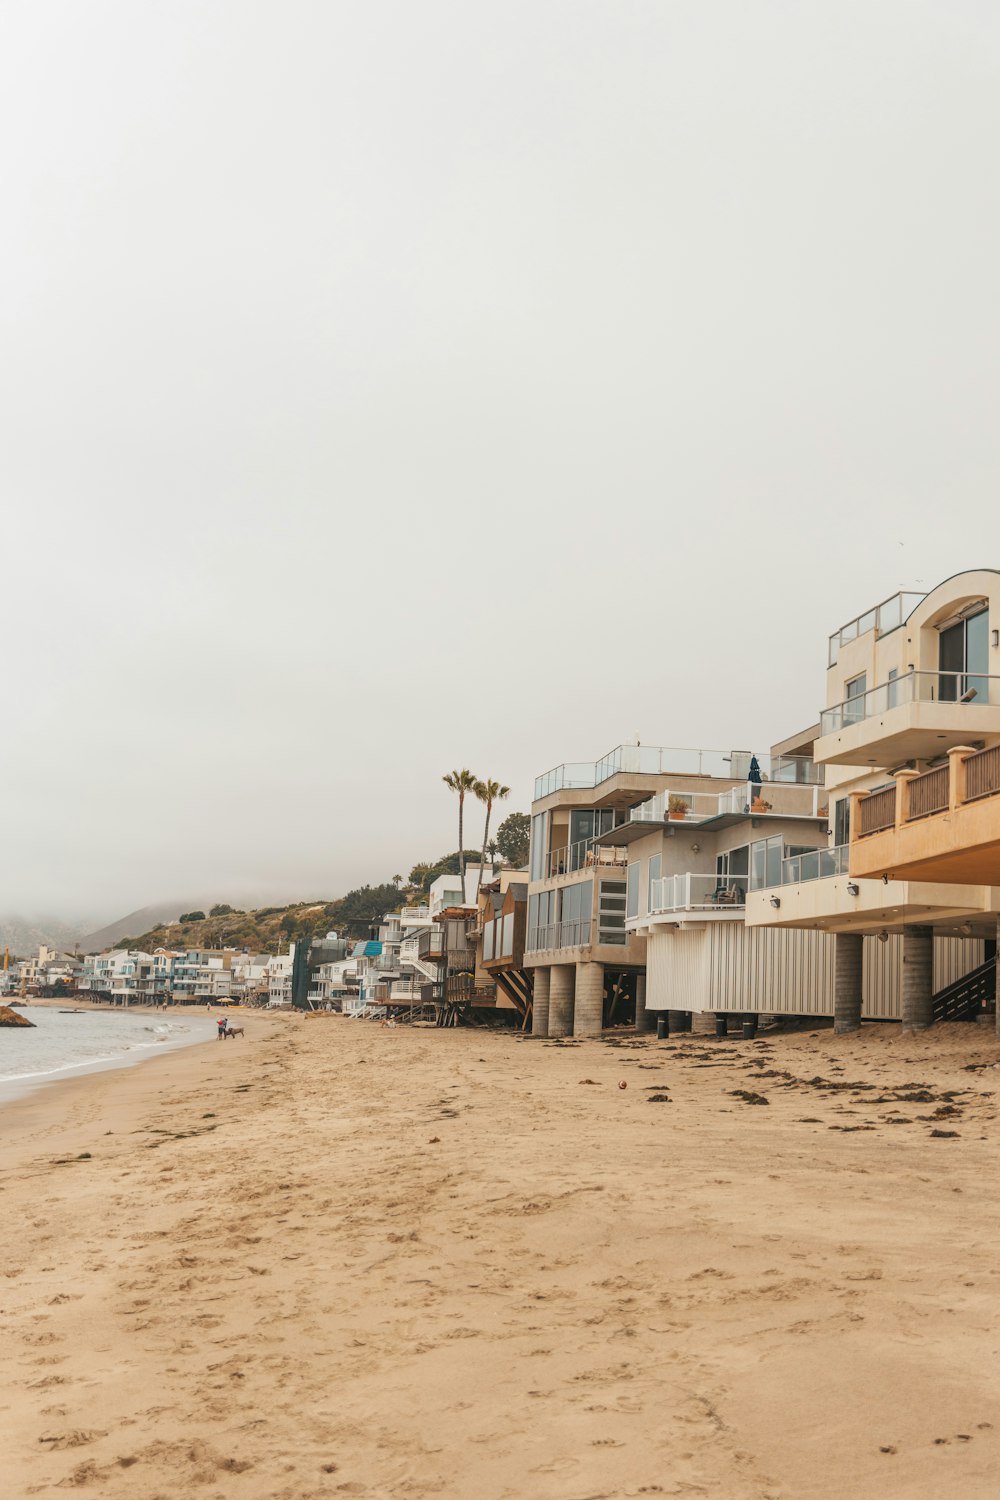 a sandy beach next to a row of houses